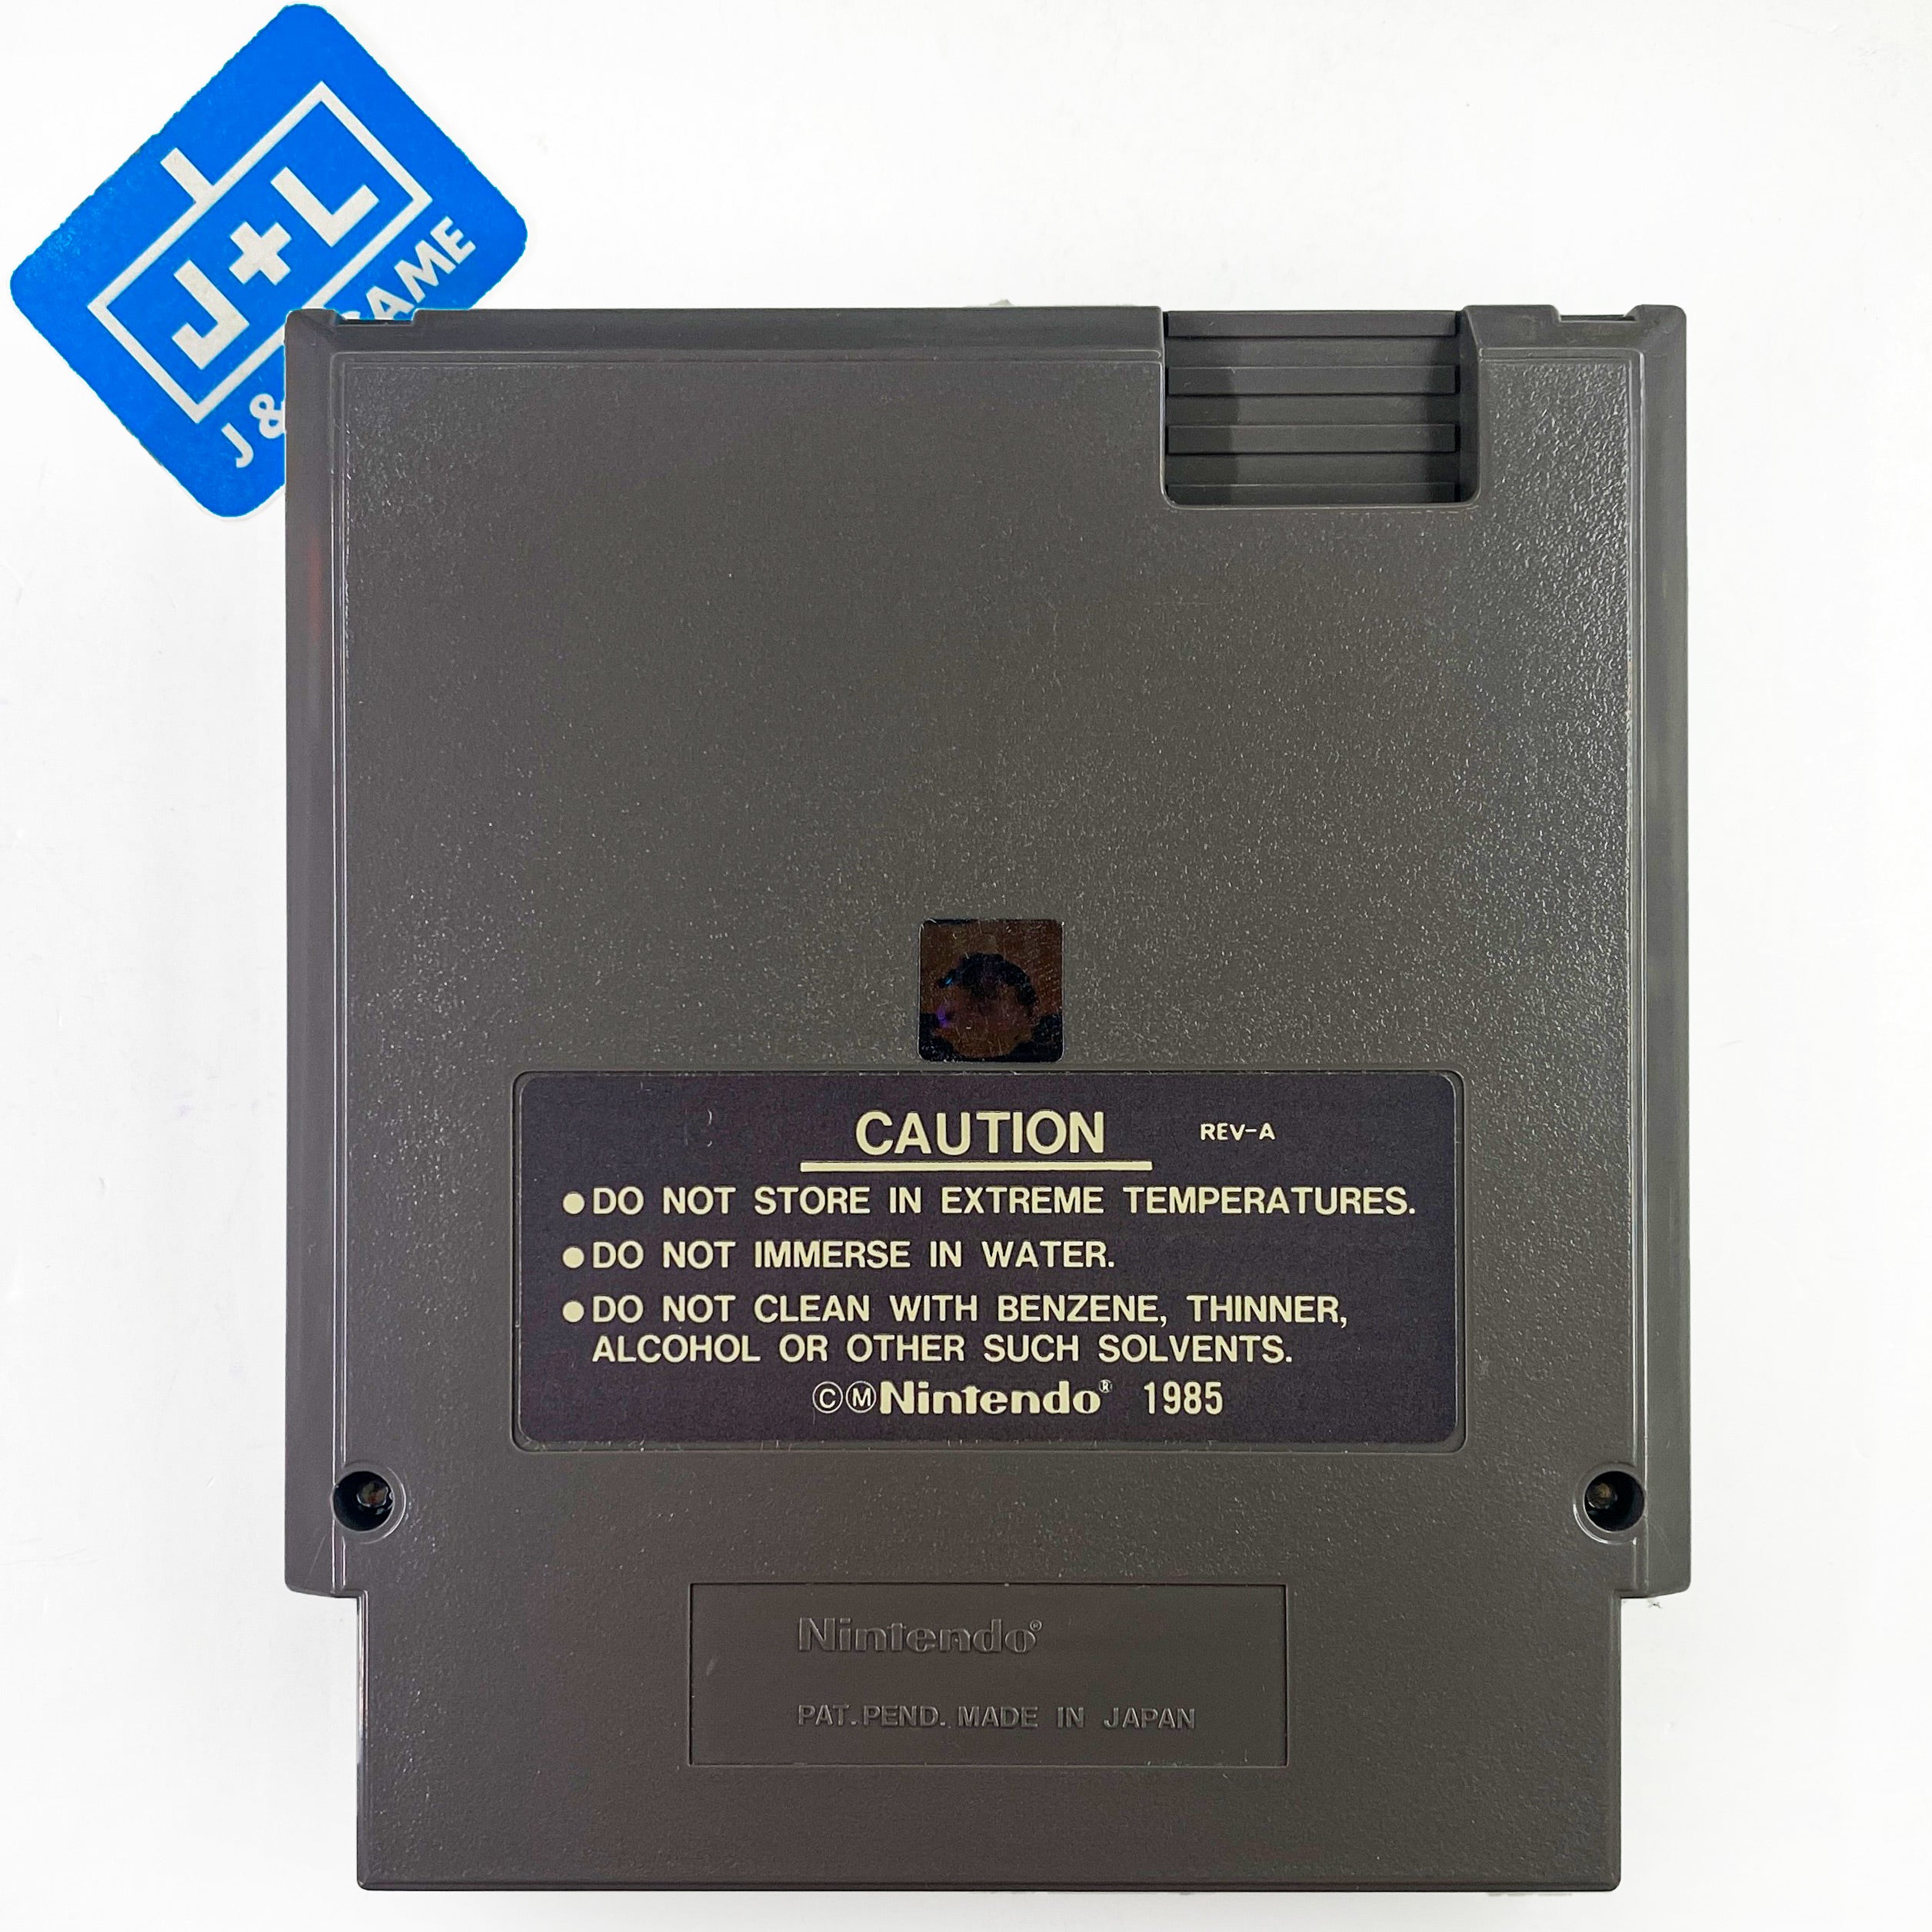 Jeopardy! Junior Edition - (NES) Nintendo Entertainment System [Pre-Owned] Video Games GameTek   